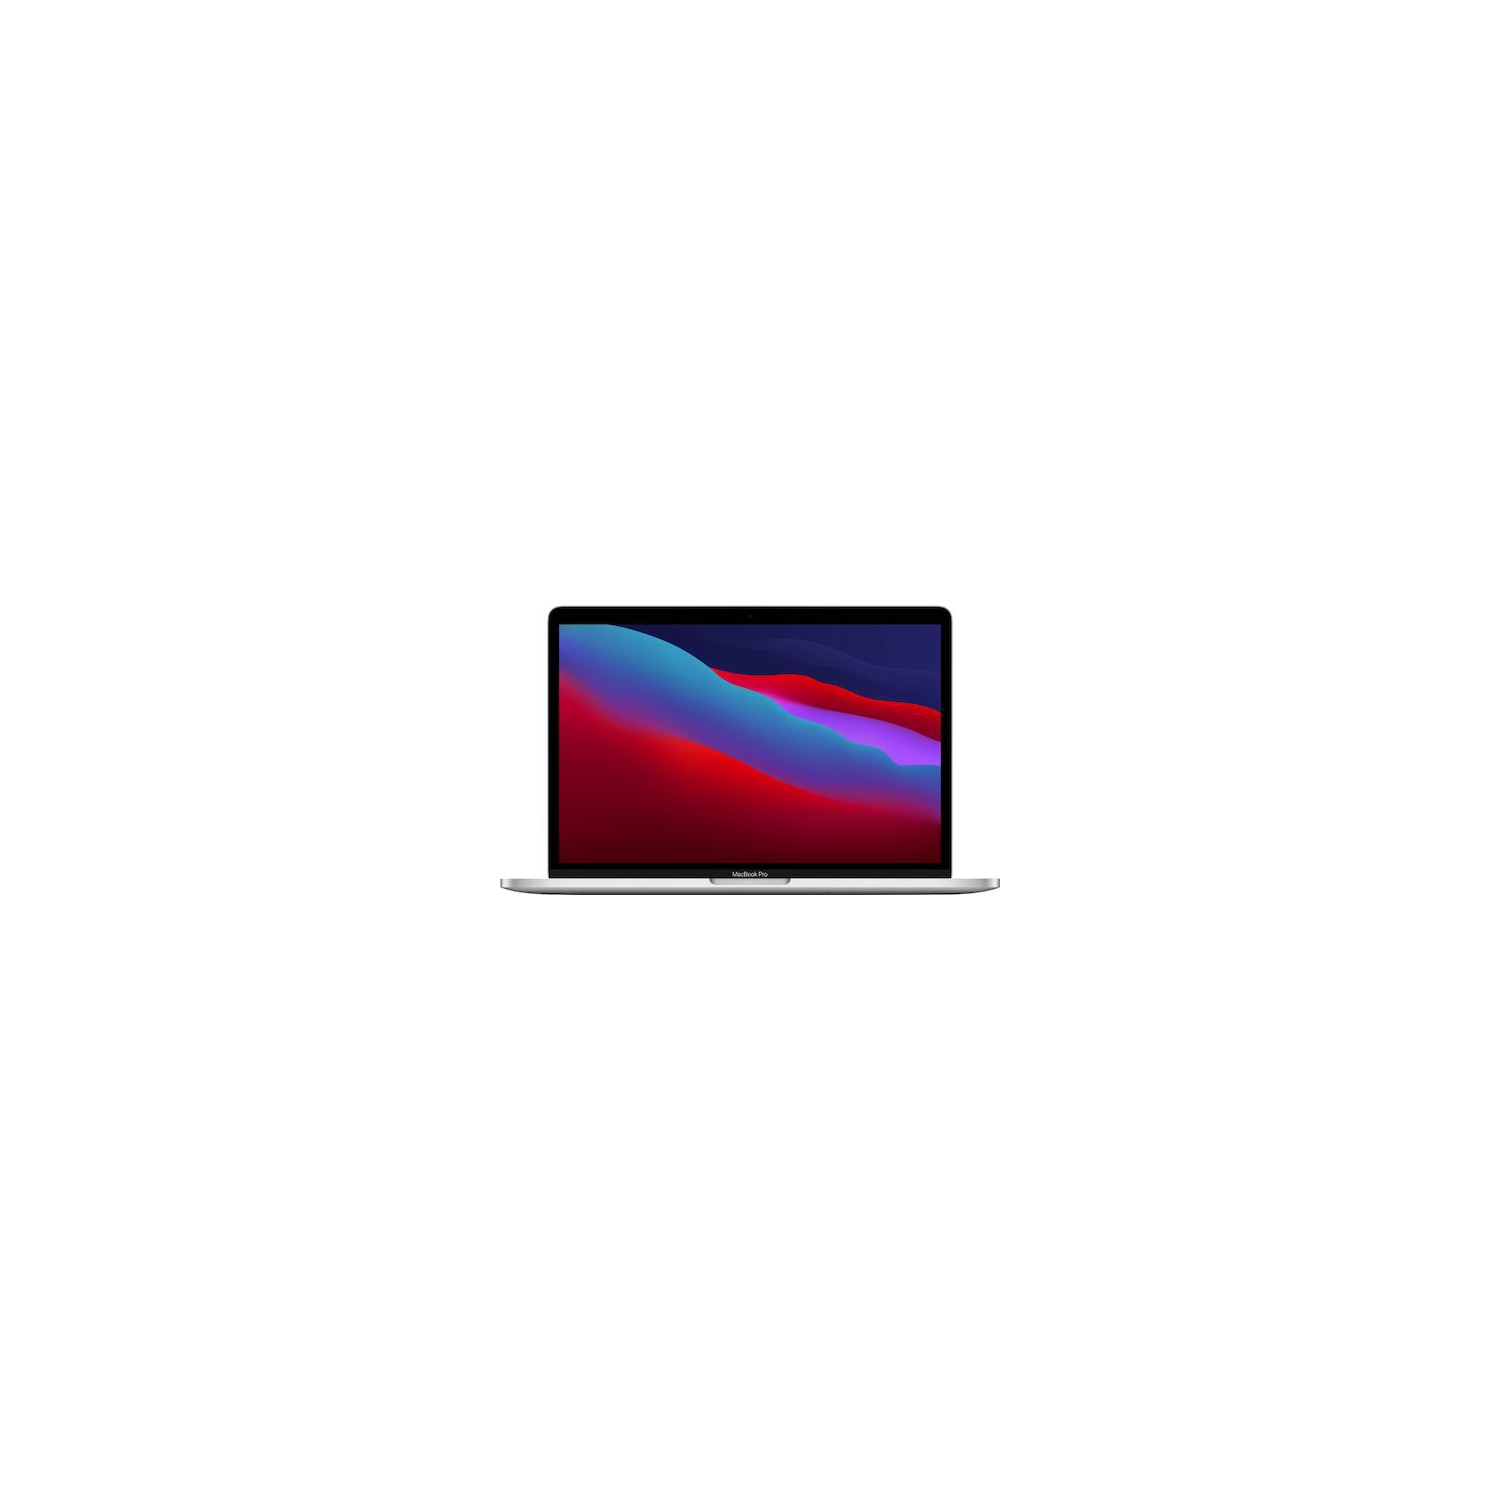 Refurbished (Excellent) - Apple Macbook Pro 15.4" (Mid 2015) Retina Display Intel Core i7, 16GB RAM, 256GB SSD, macOS Big Sur, Silver